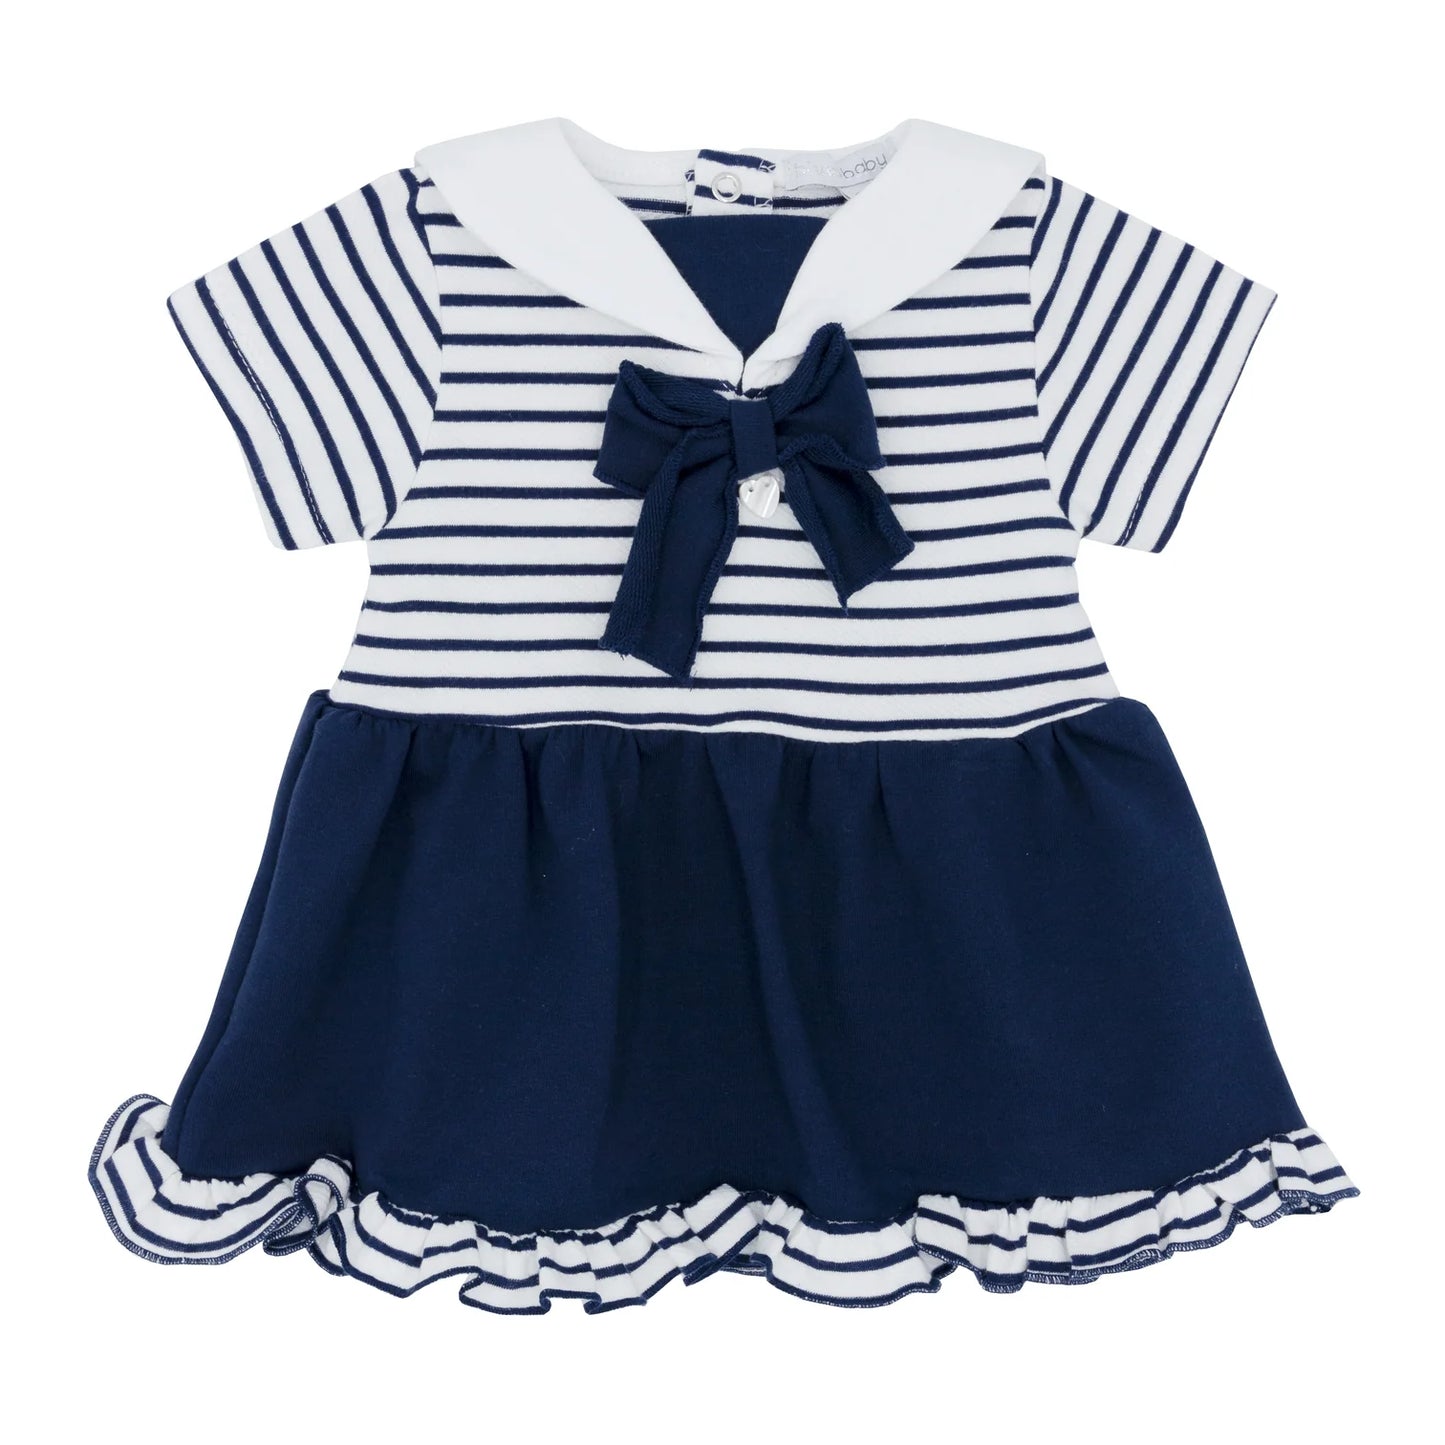 Blues Baby navy sailor dress